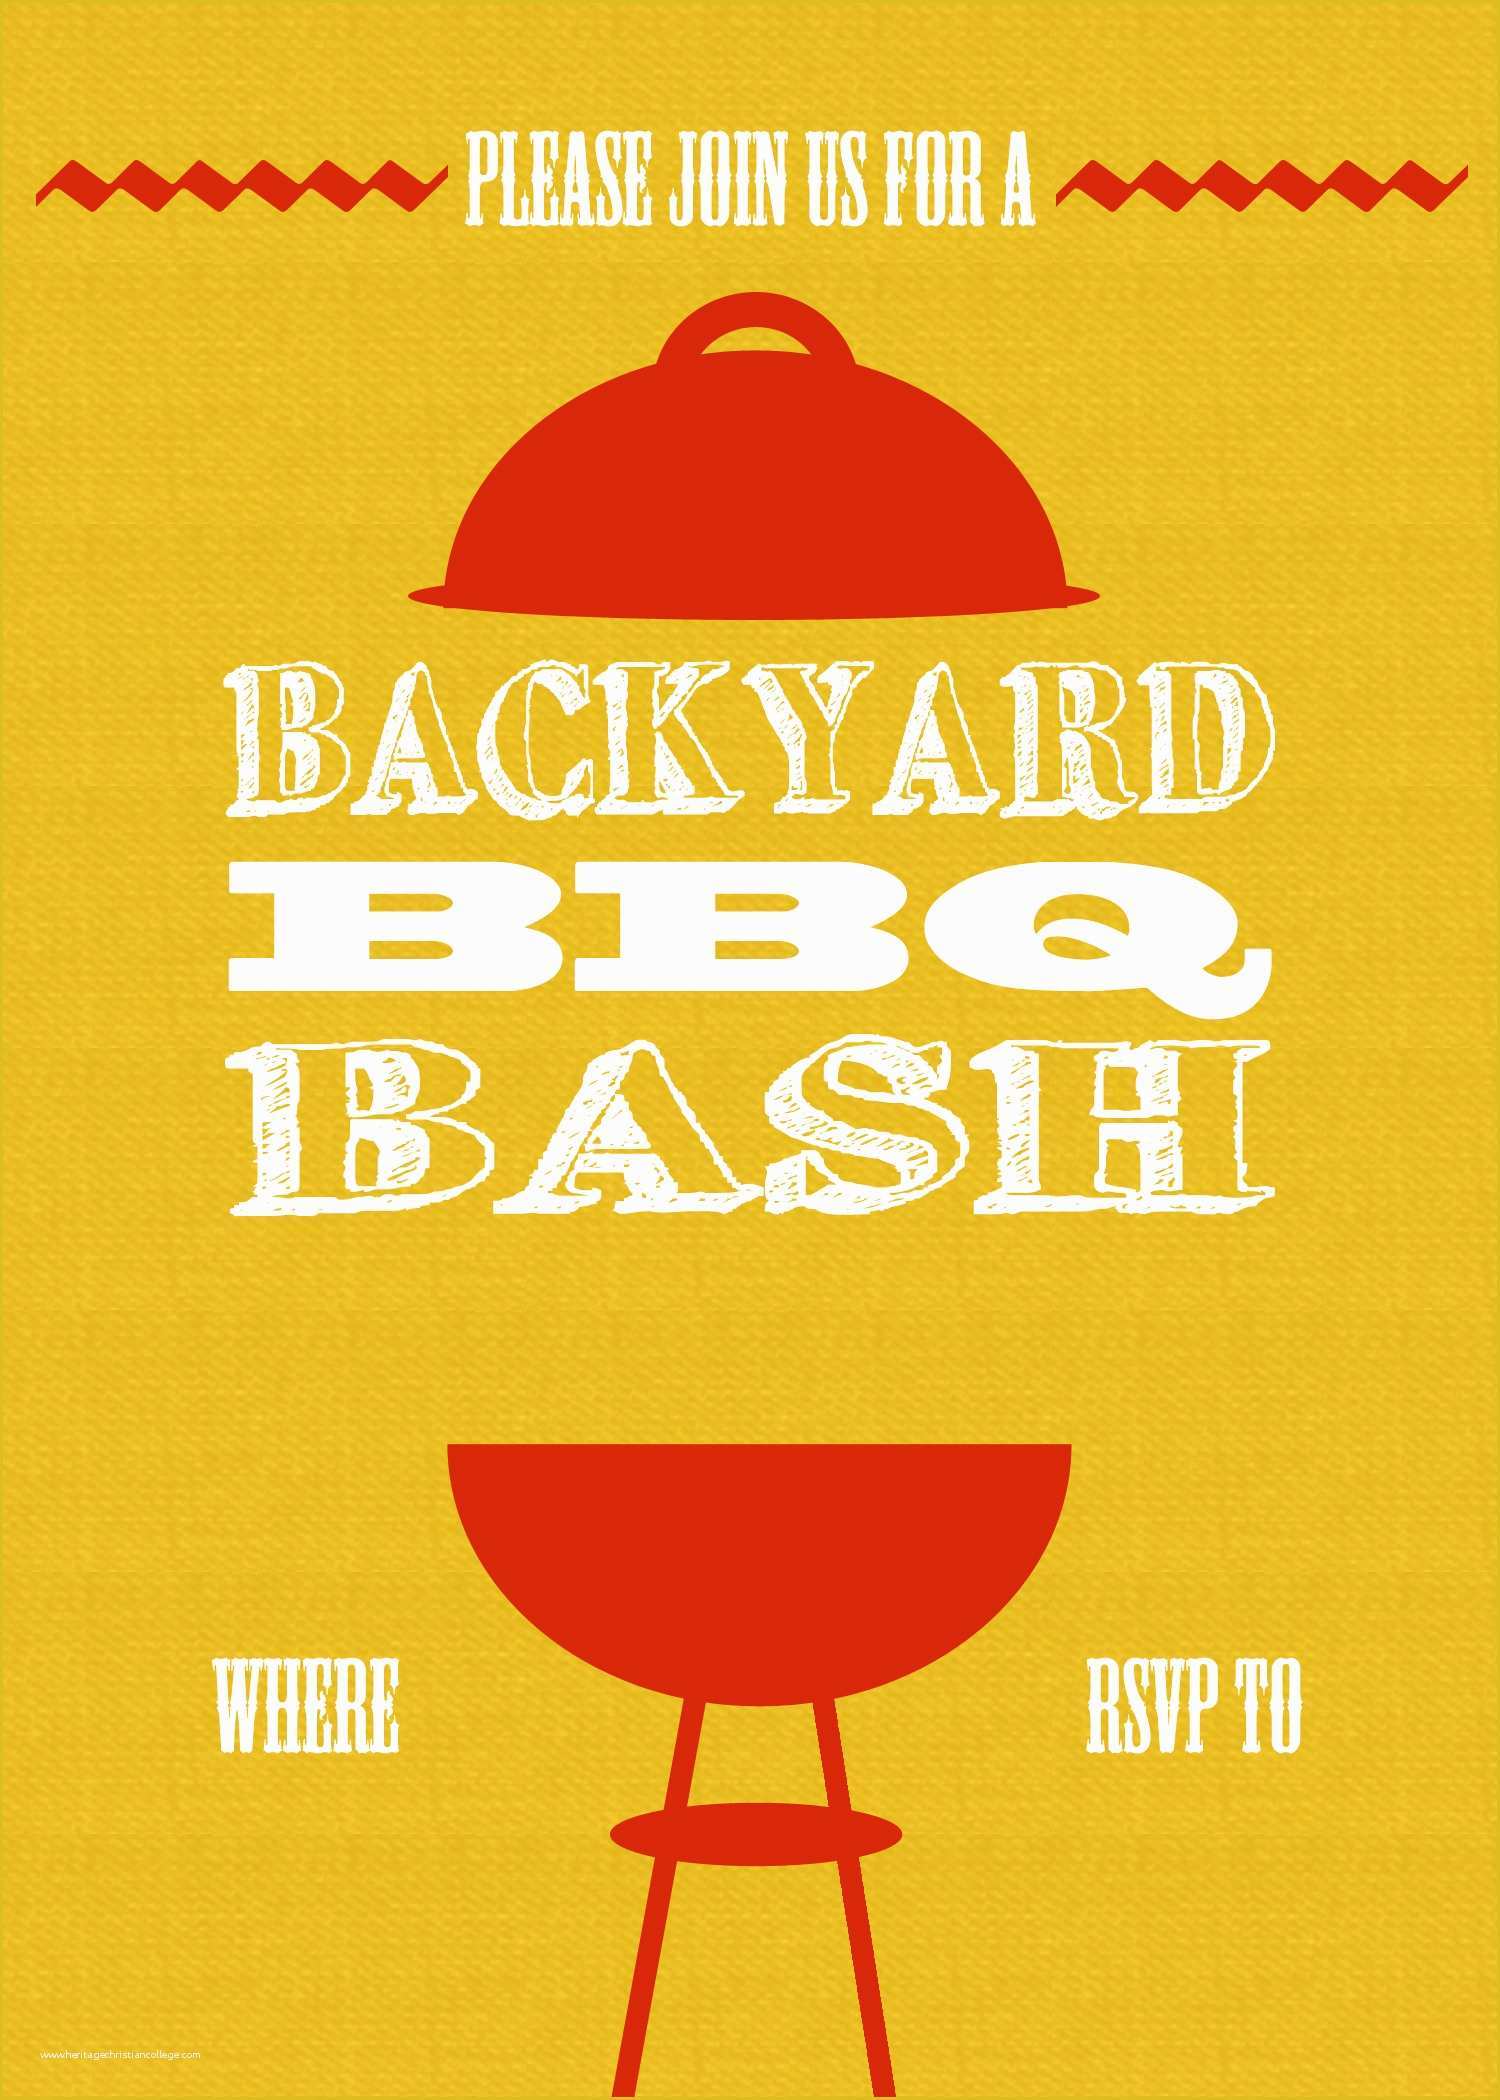 Free Printable Bbq Invitation Templates Of Diy Printable Backyard Bbq Bash Invite